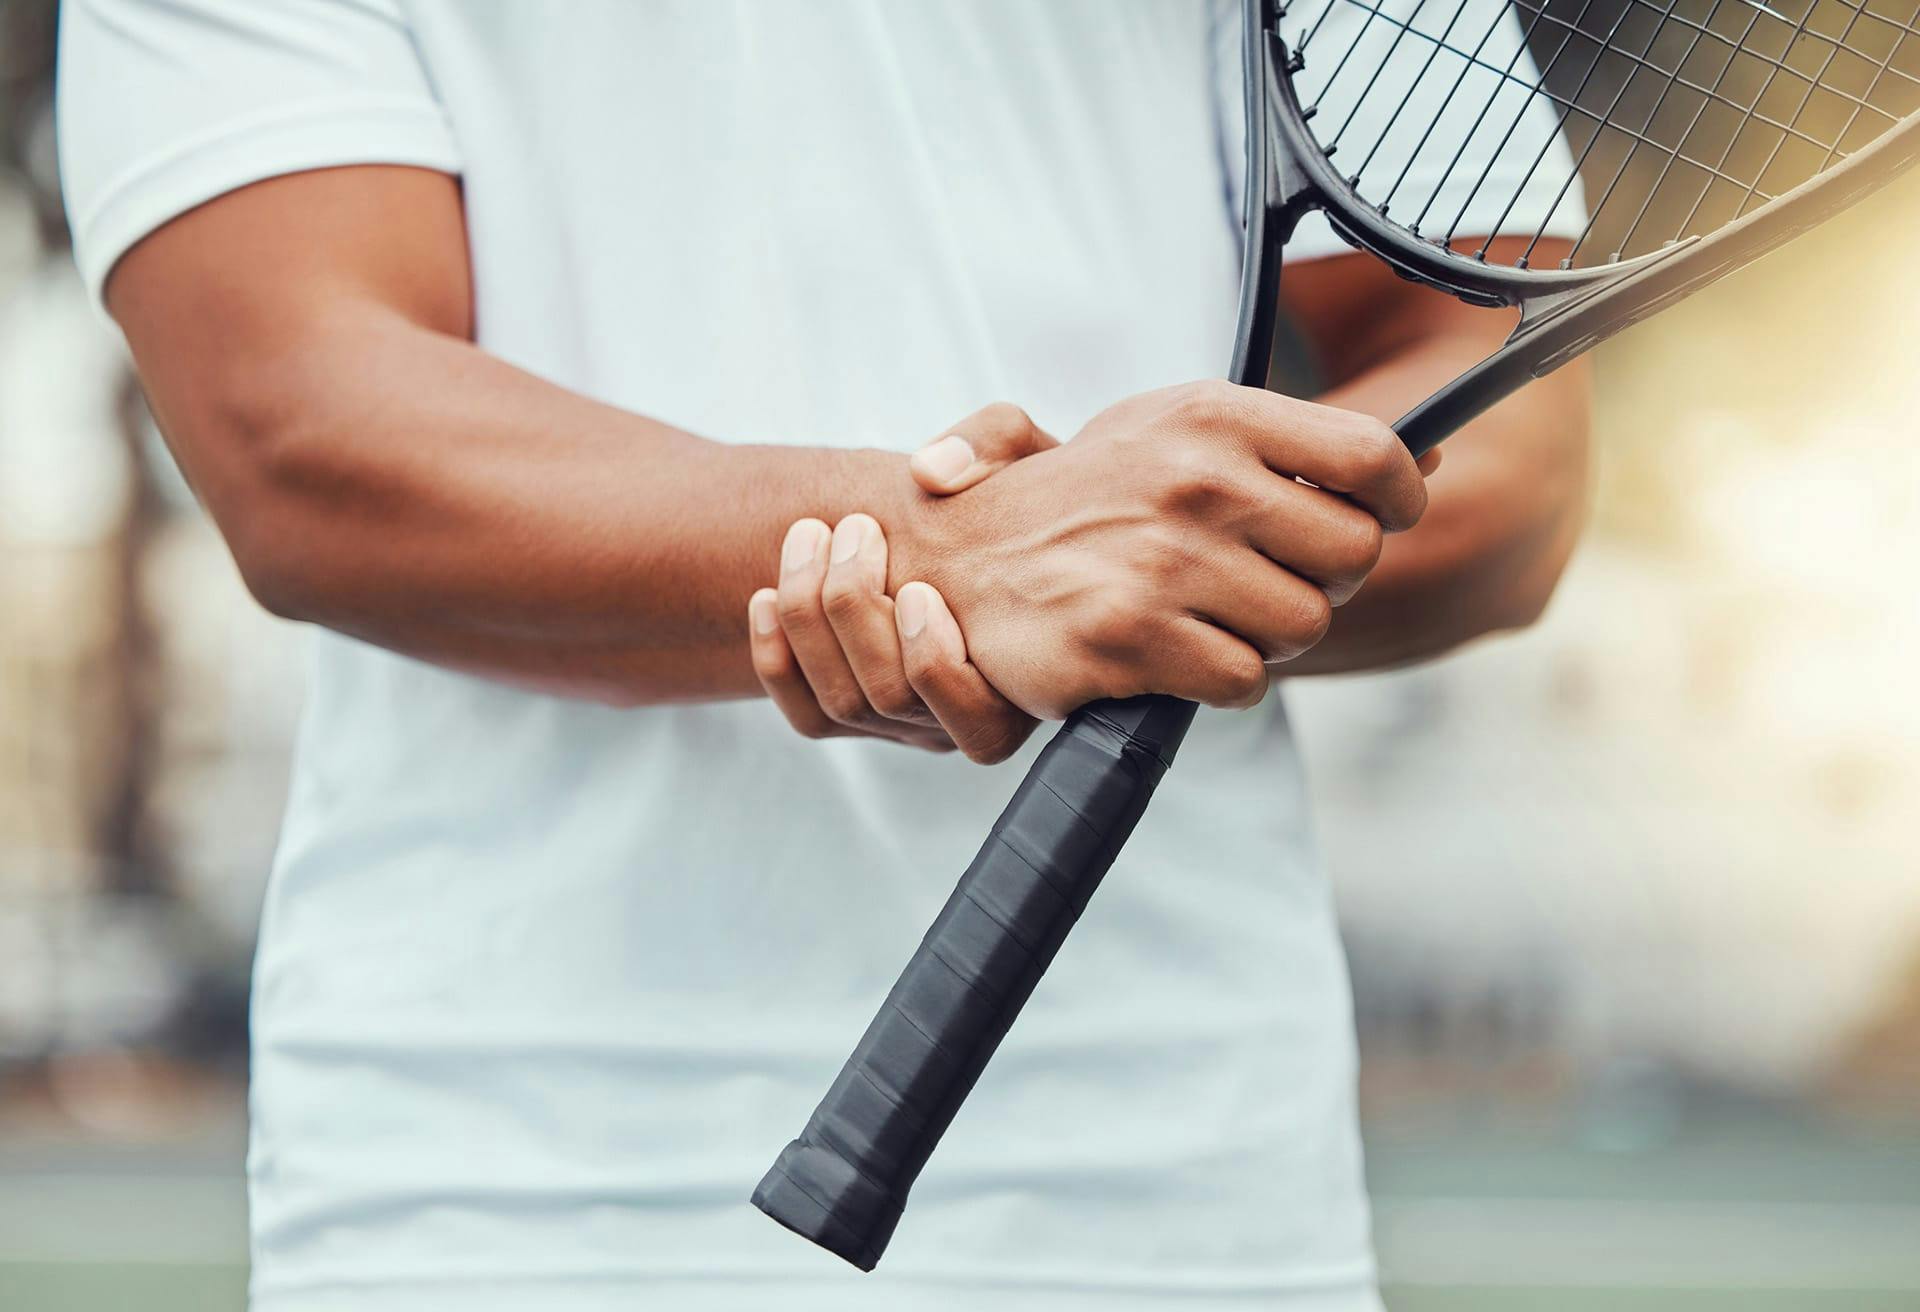 Man holding wrist in pain during tennis